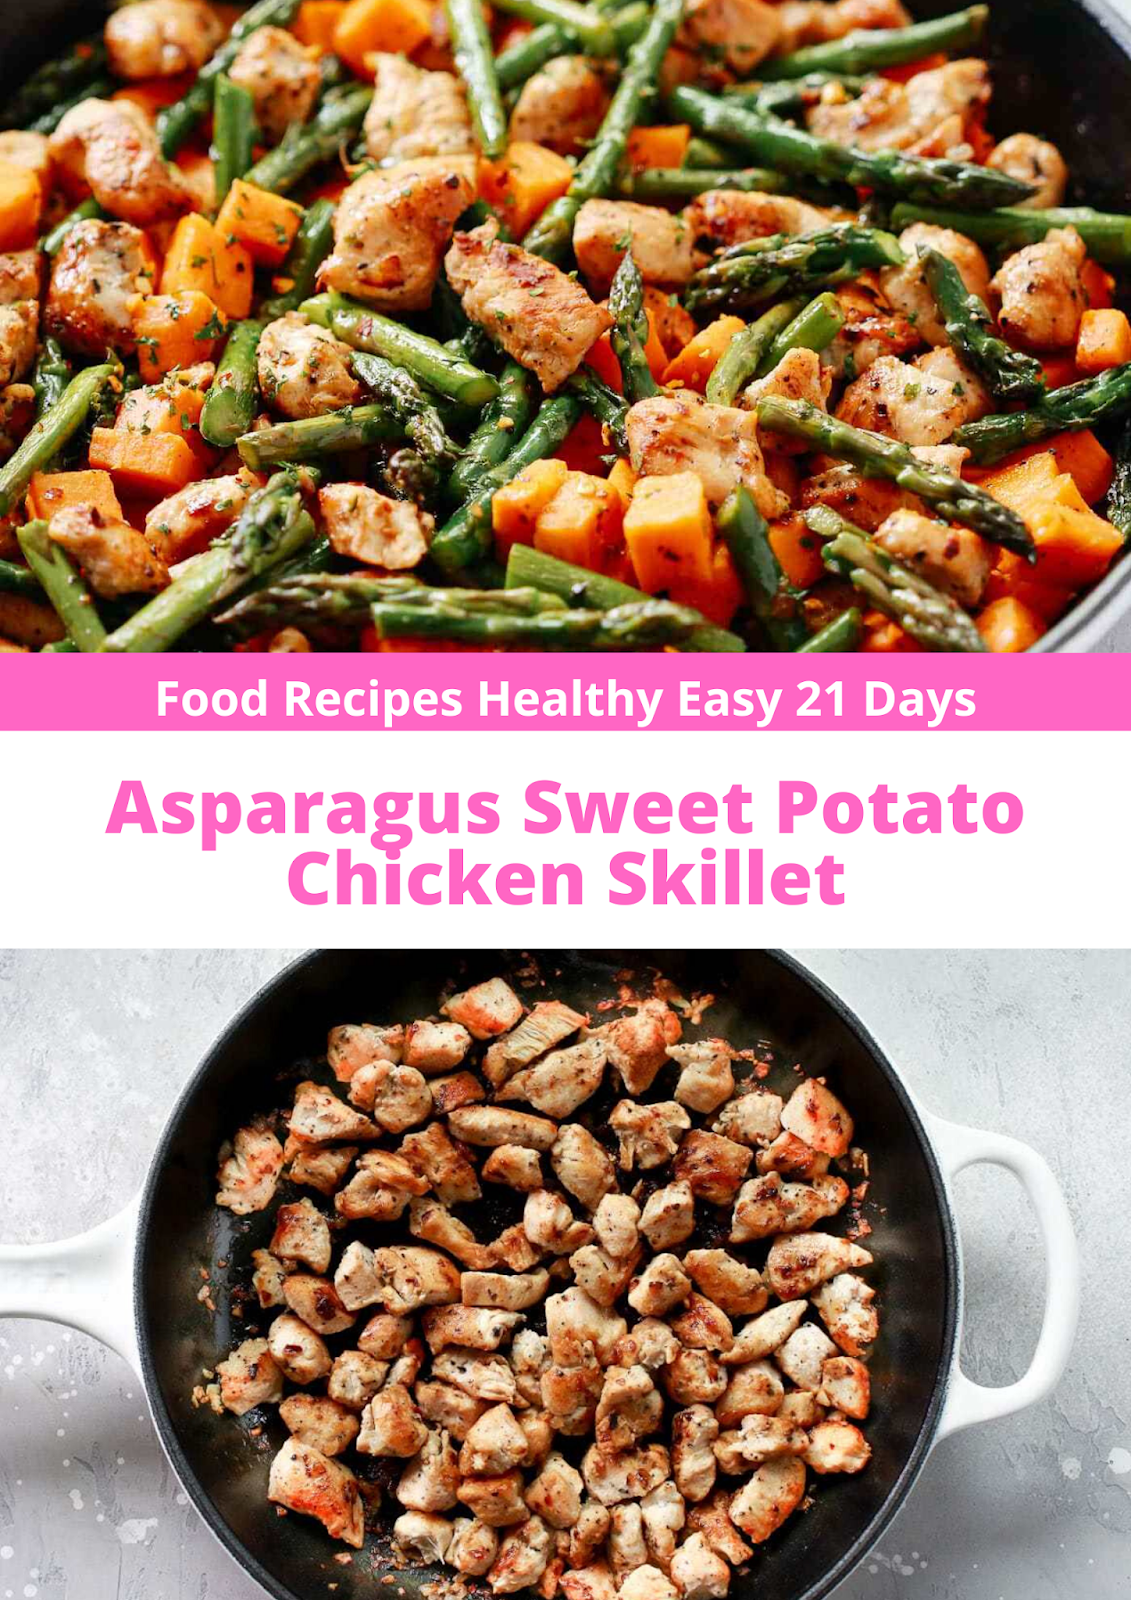 Asparagus Sweet Potato Chicken Skillet